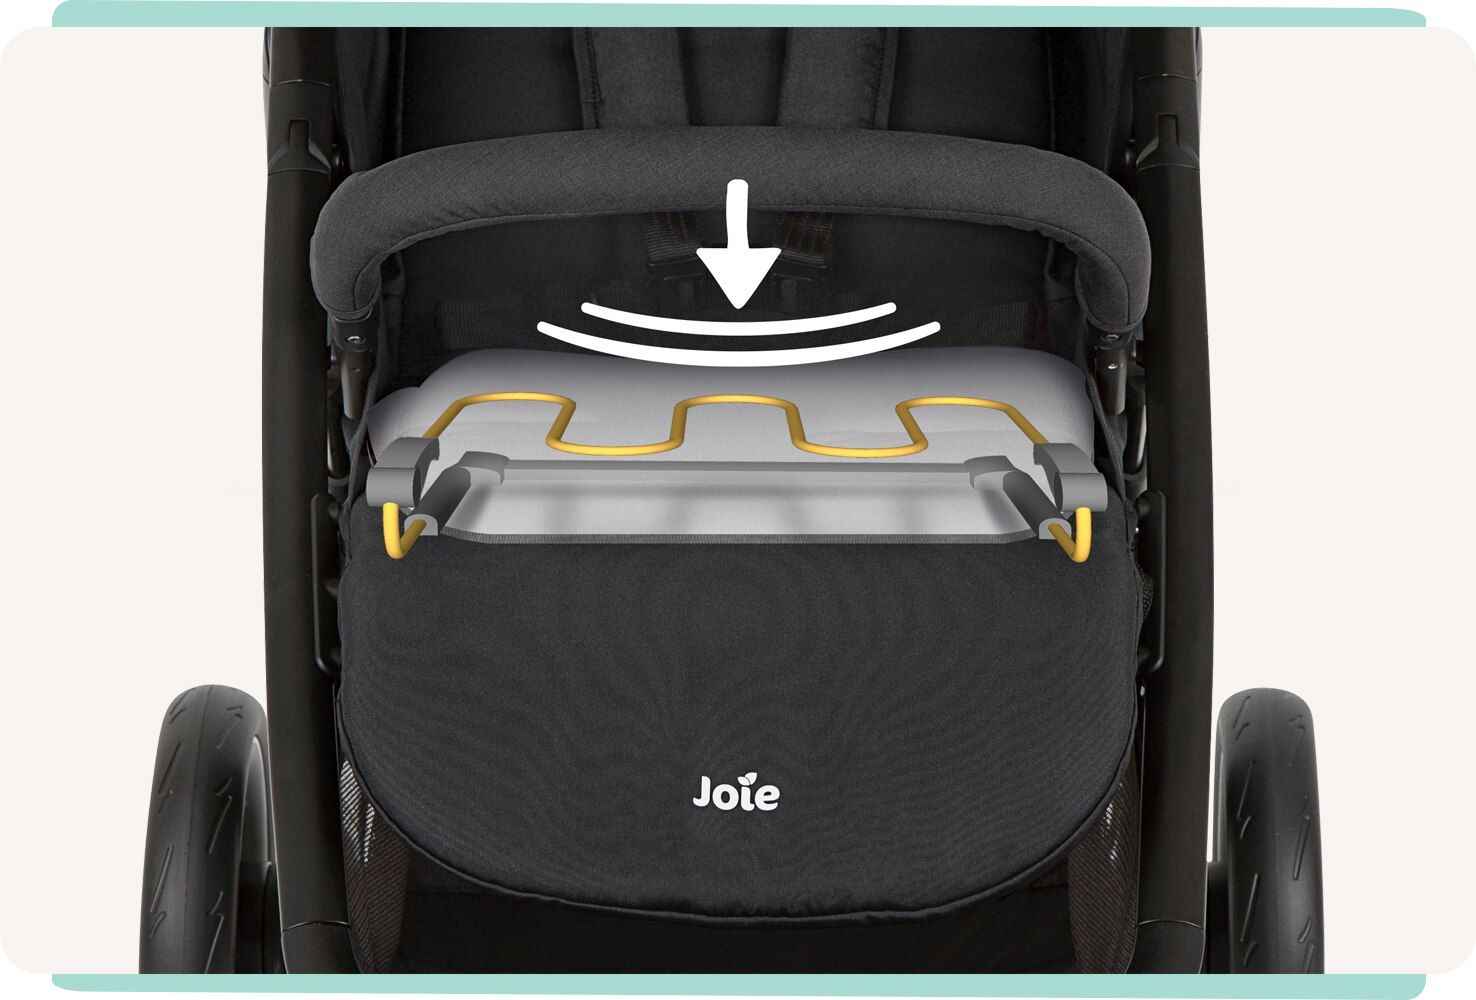 JoIe black litetrax S stroller with animation of flex comfort spring.